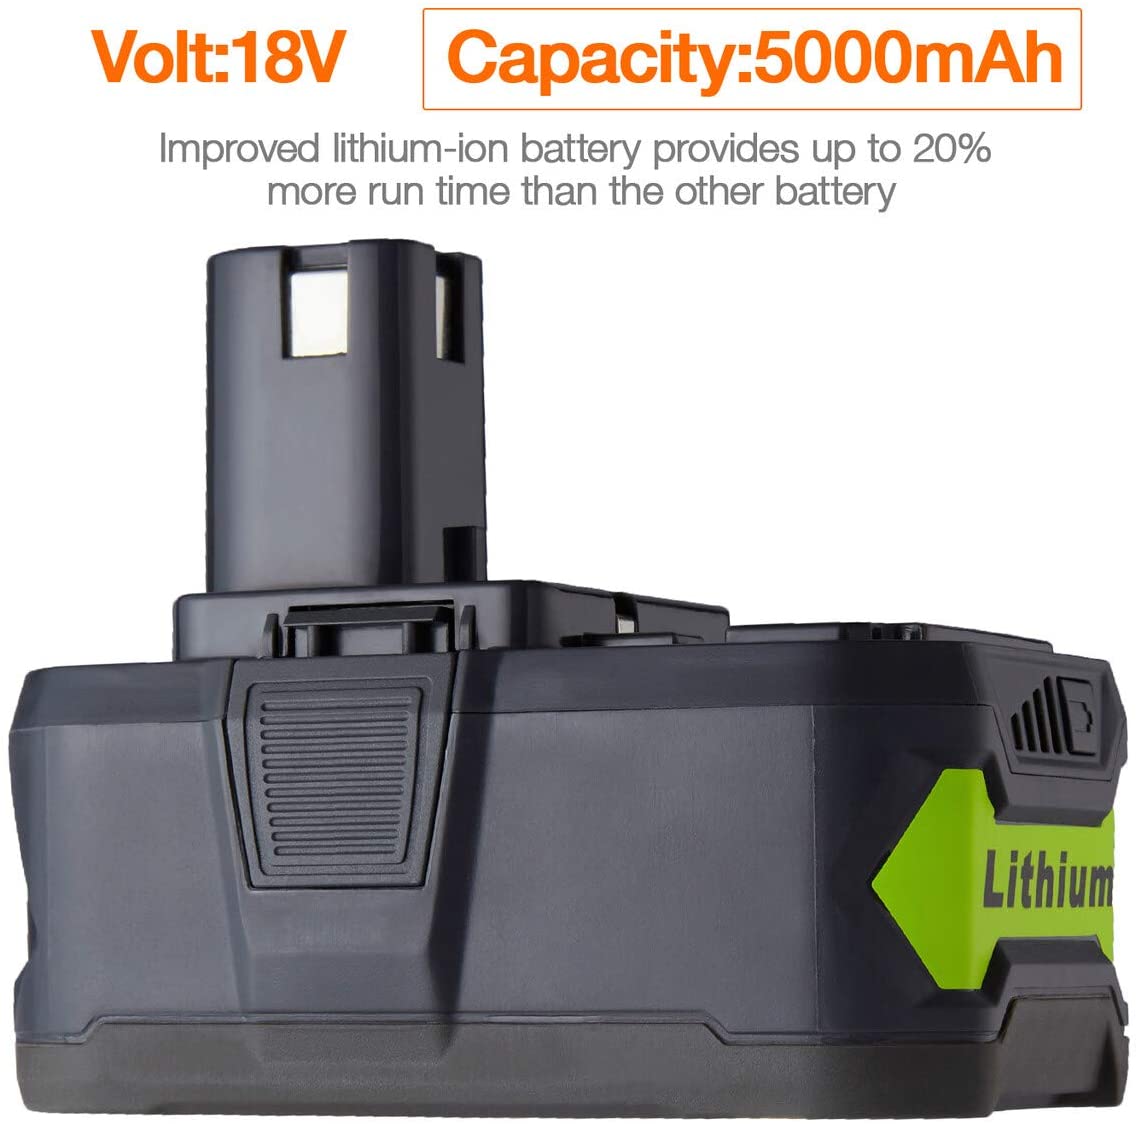 https://www.batteryworld.com/wp-content/uploads/imported/Dutyone-5000mAh-Lithium-Ion-18-Volt-Replacement-Battery-for-Ryobi-18V-Lithium-Ion-Battery-P102-P103-P104-P105-P107-P108-B07VKN5C2Z-2.jpg